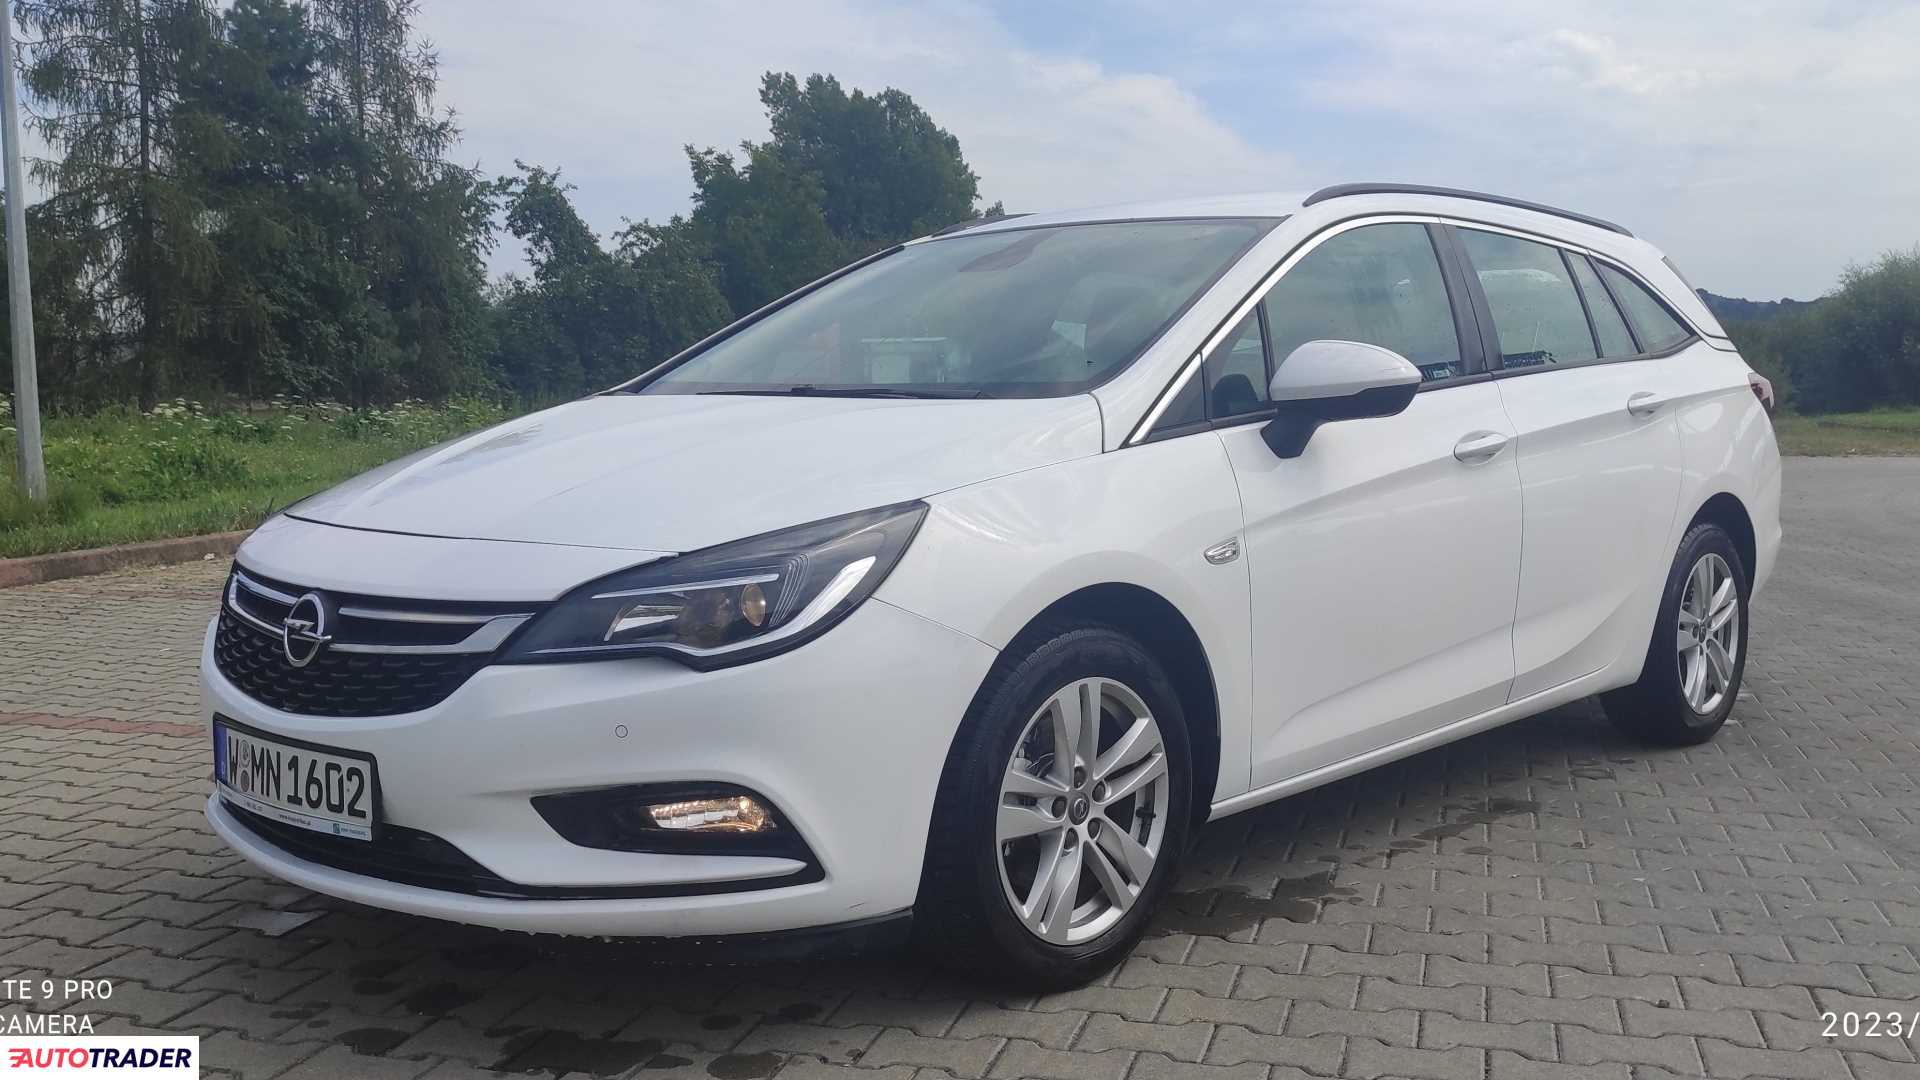 Opel Astra 2017 1.6 136 KM